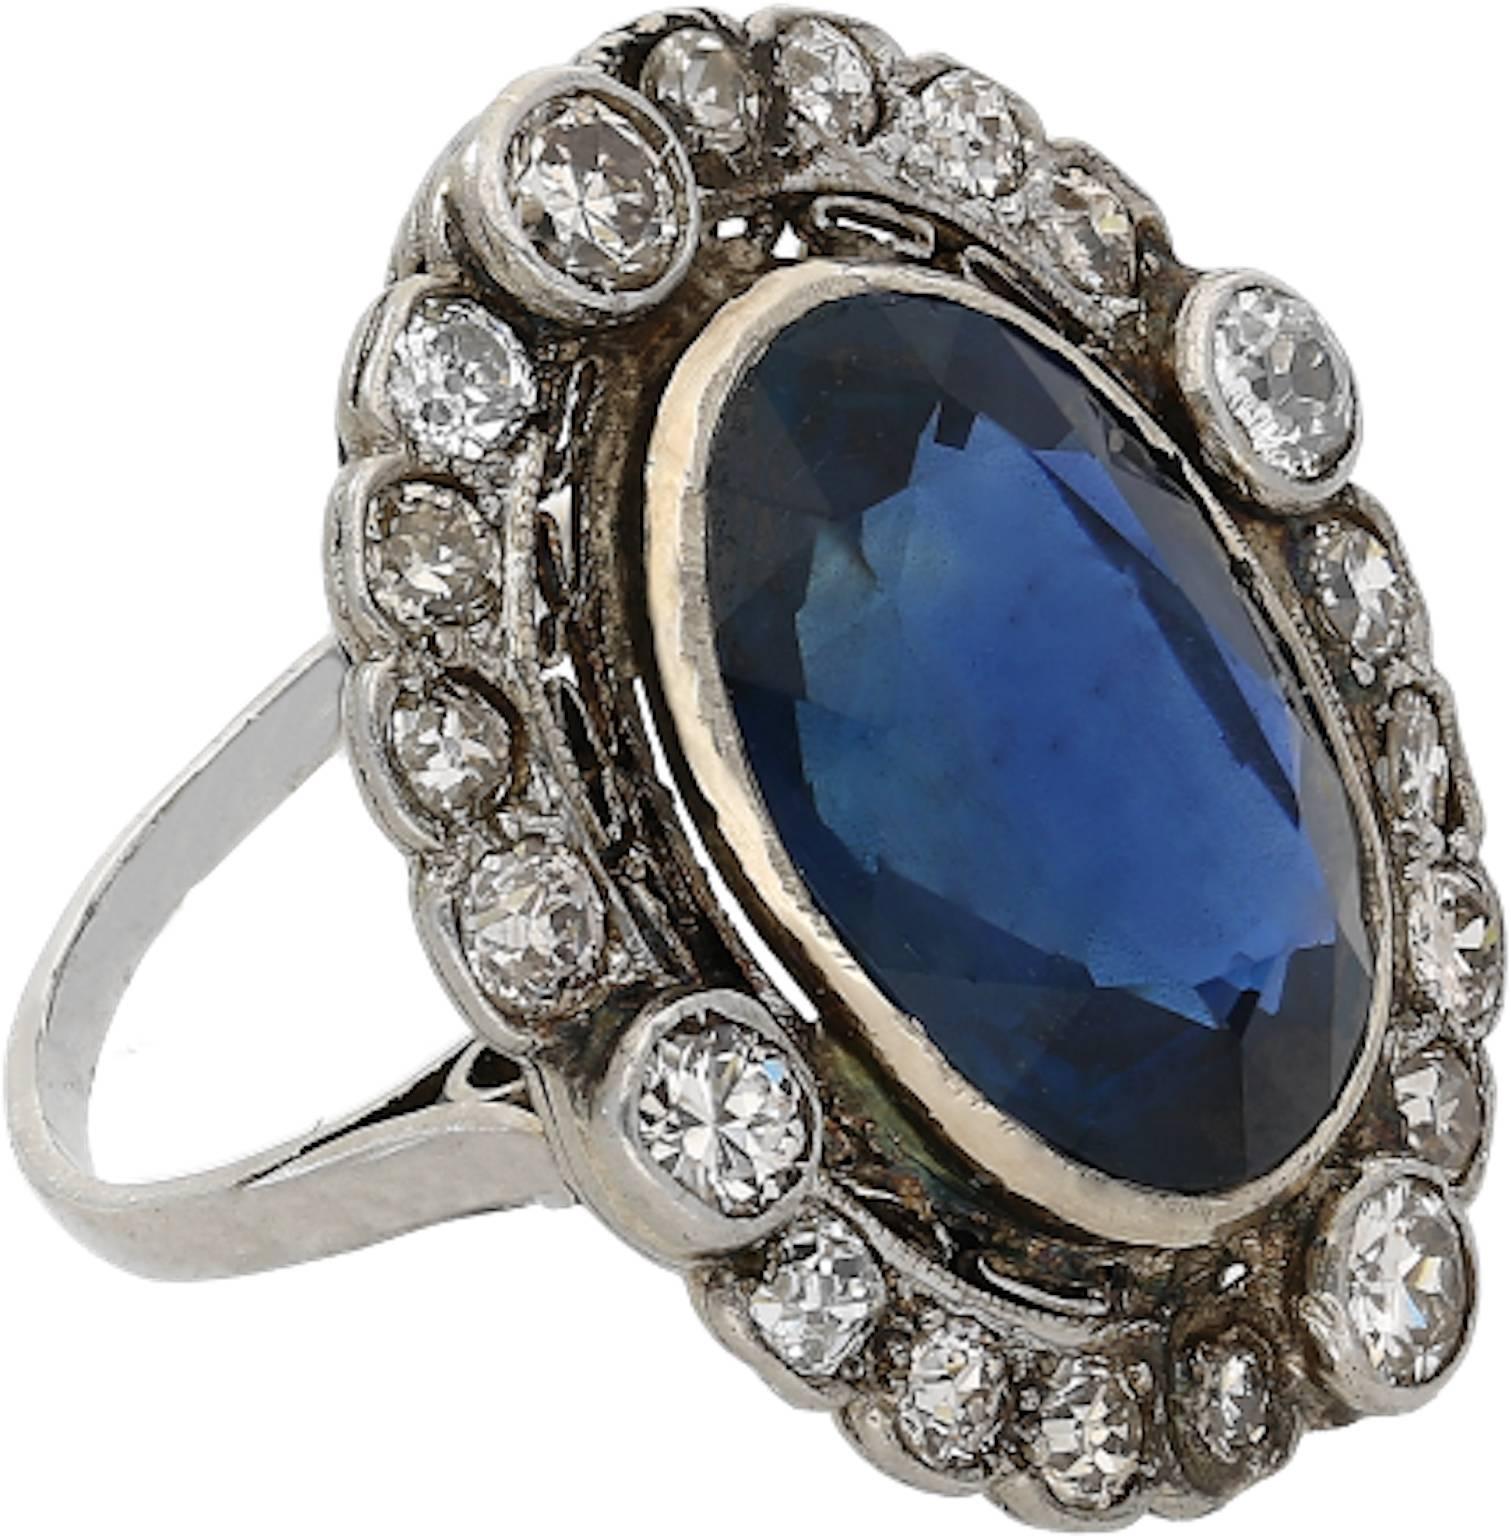 15 carat sapphire ring